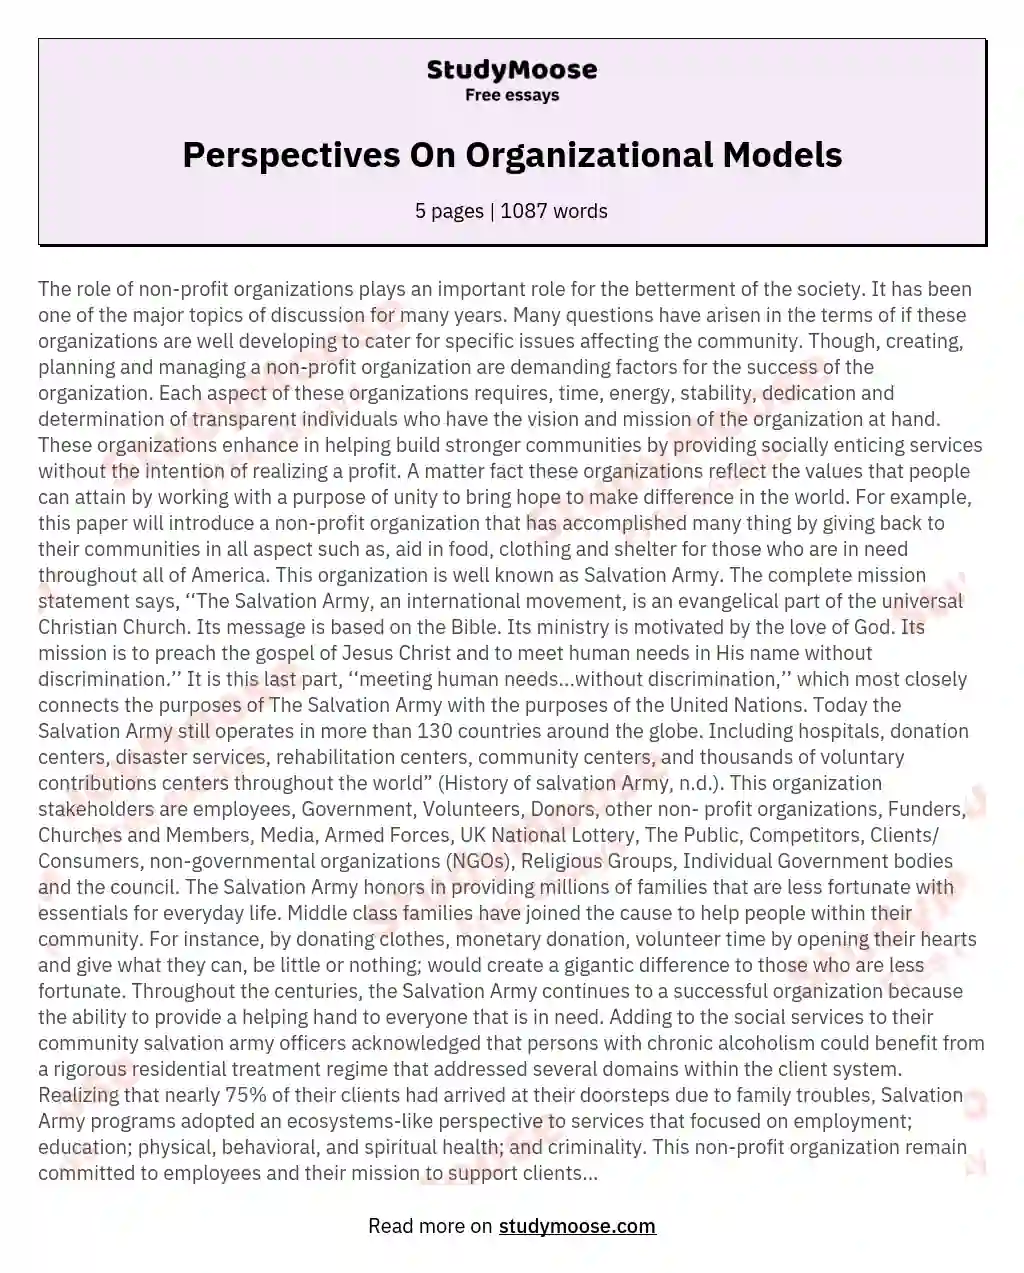 Perspectives On Organizational Models essay